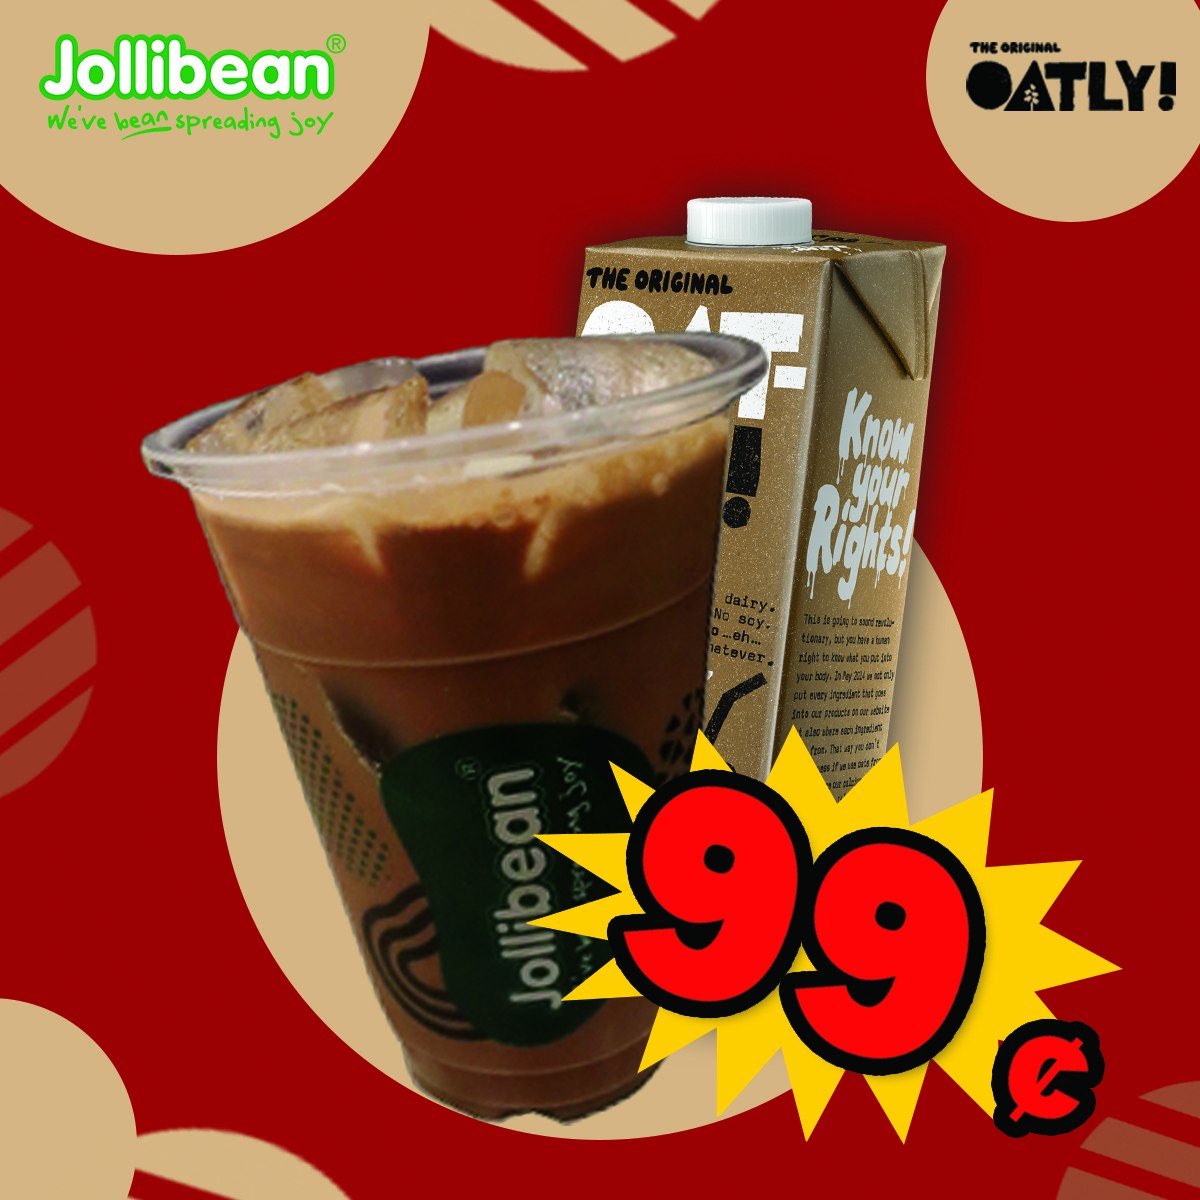 Jollibean promo - 99 cents